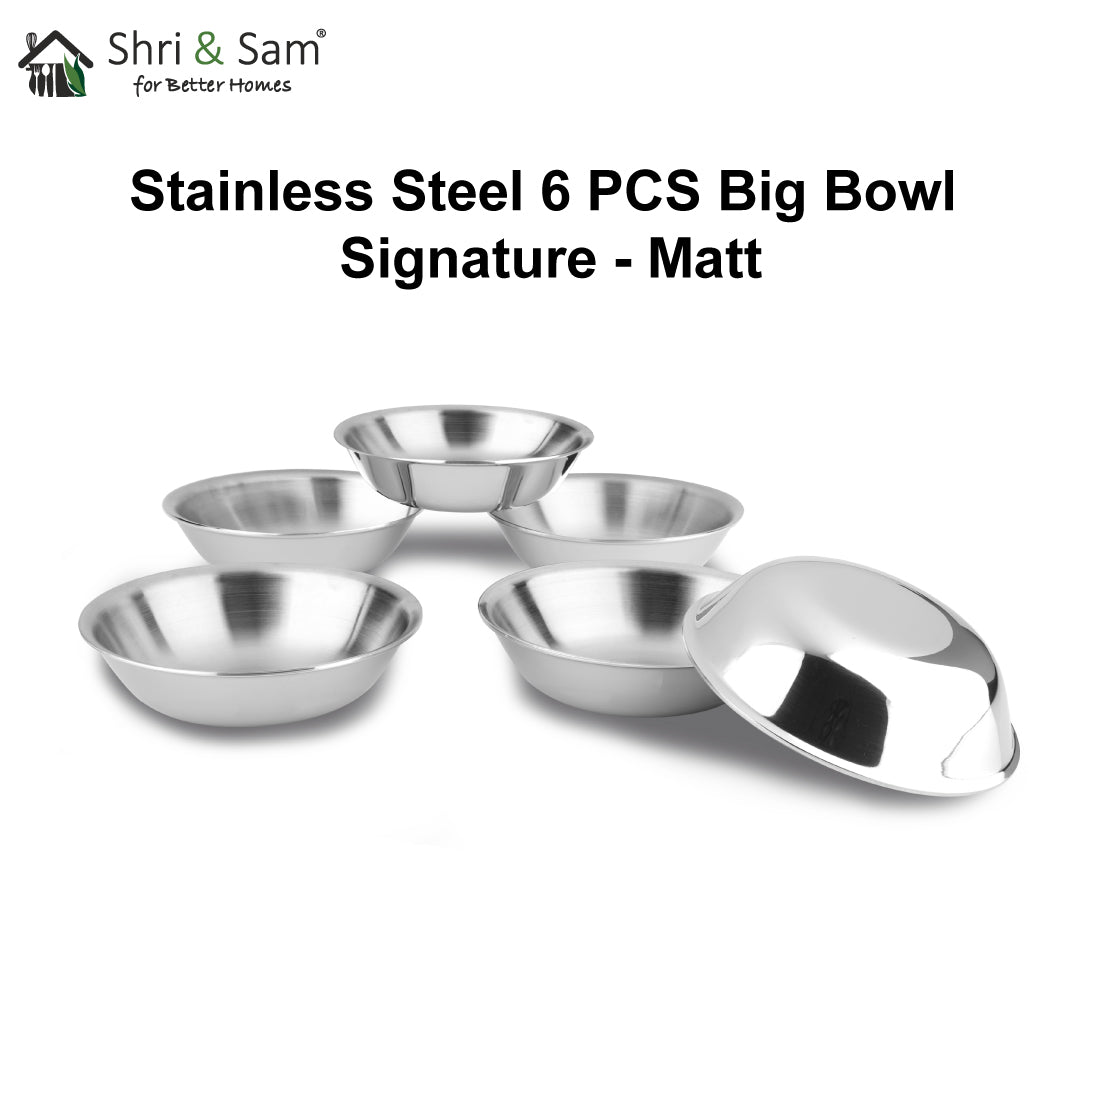 Stainless Steel 6 PCS Big Bowl Signature - Matt